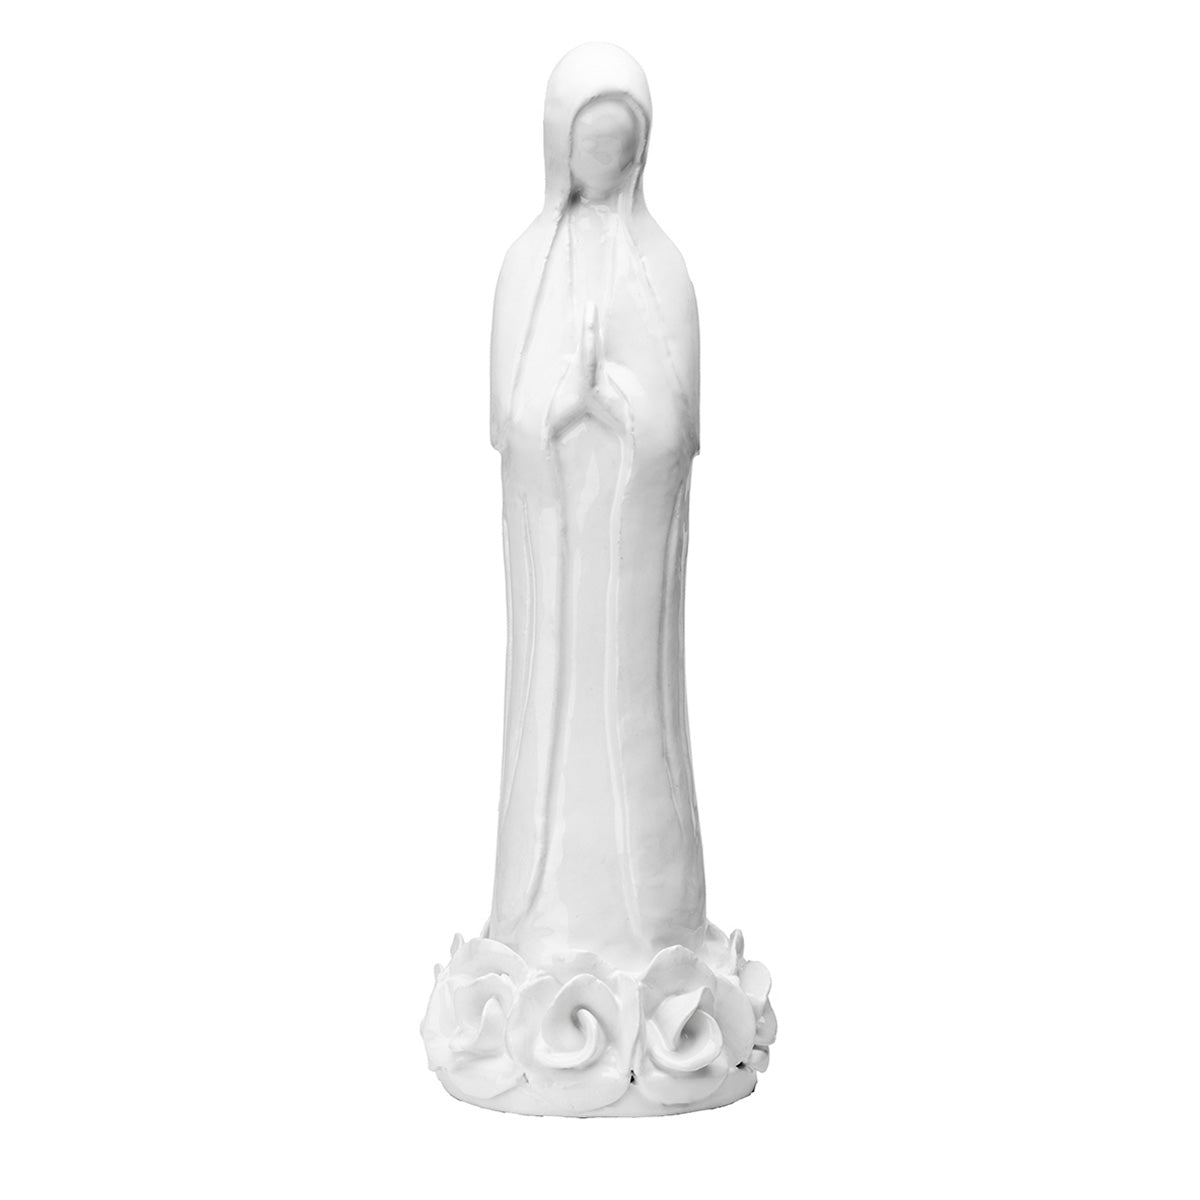 Virgin Mary figure in ceramic